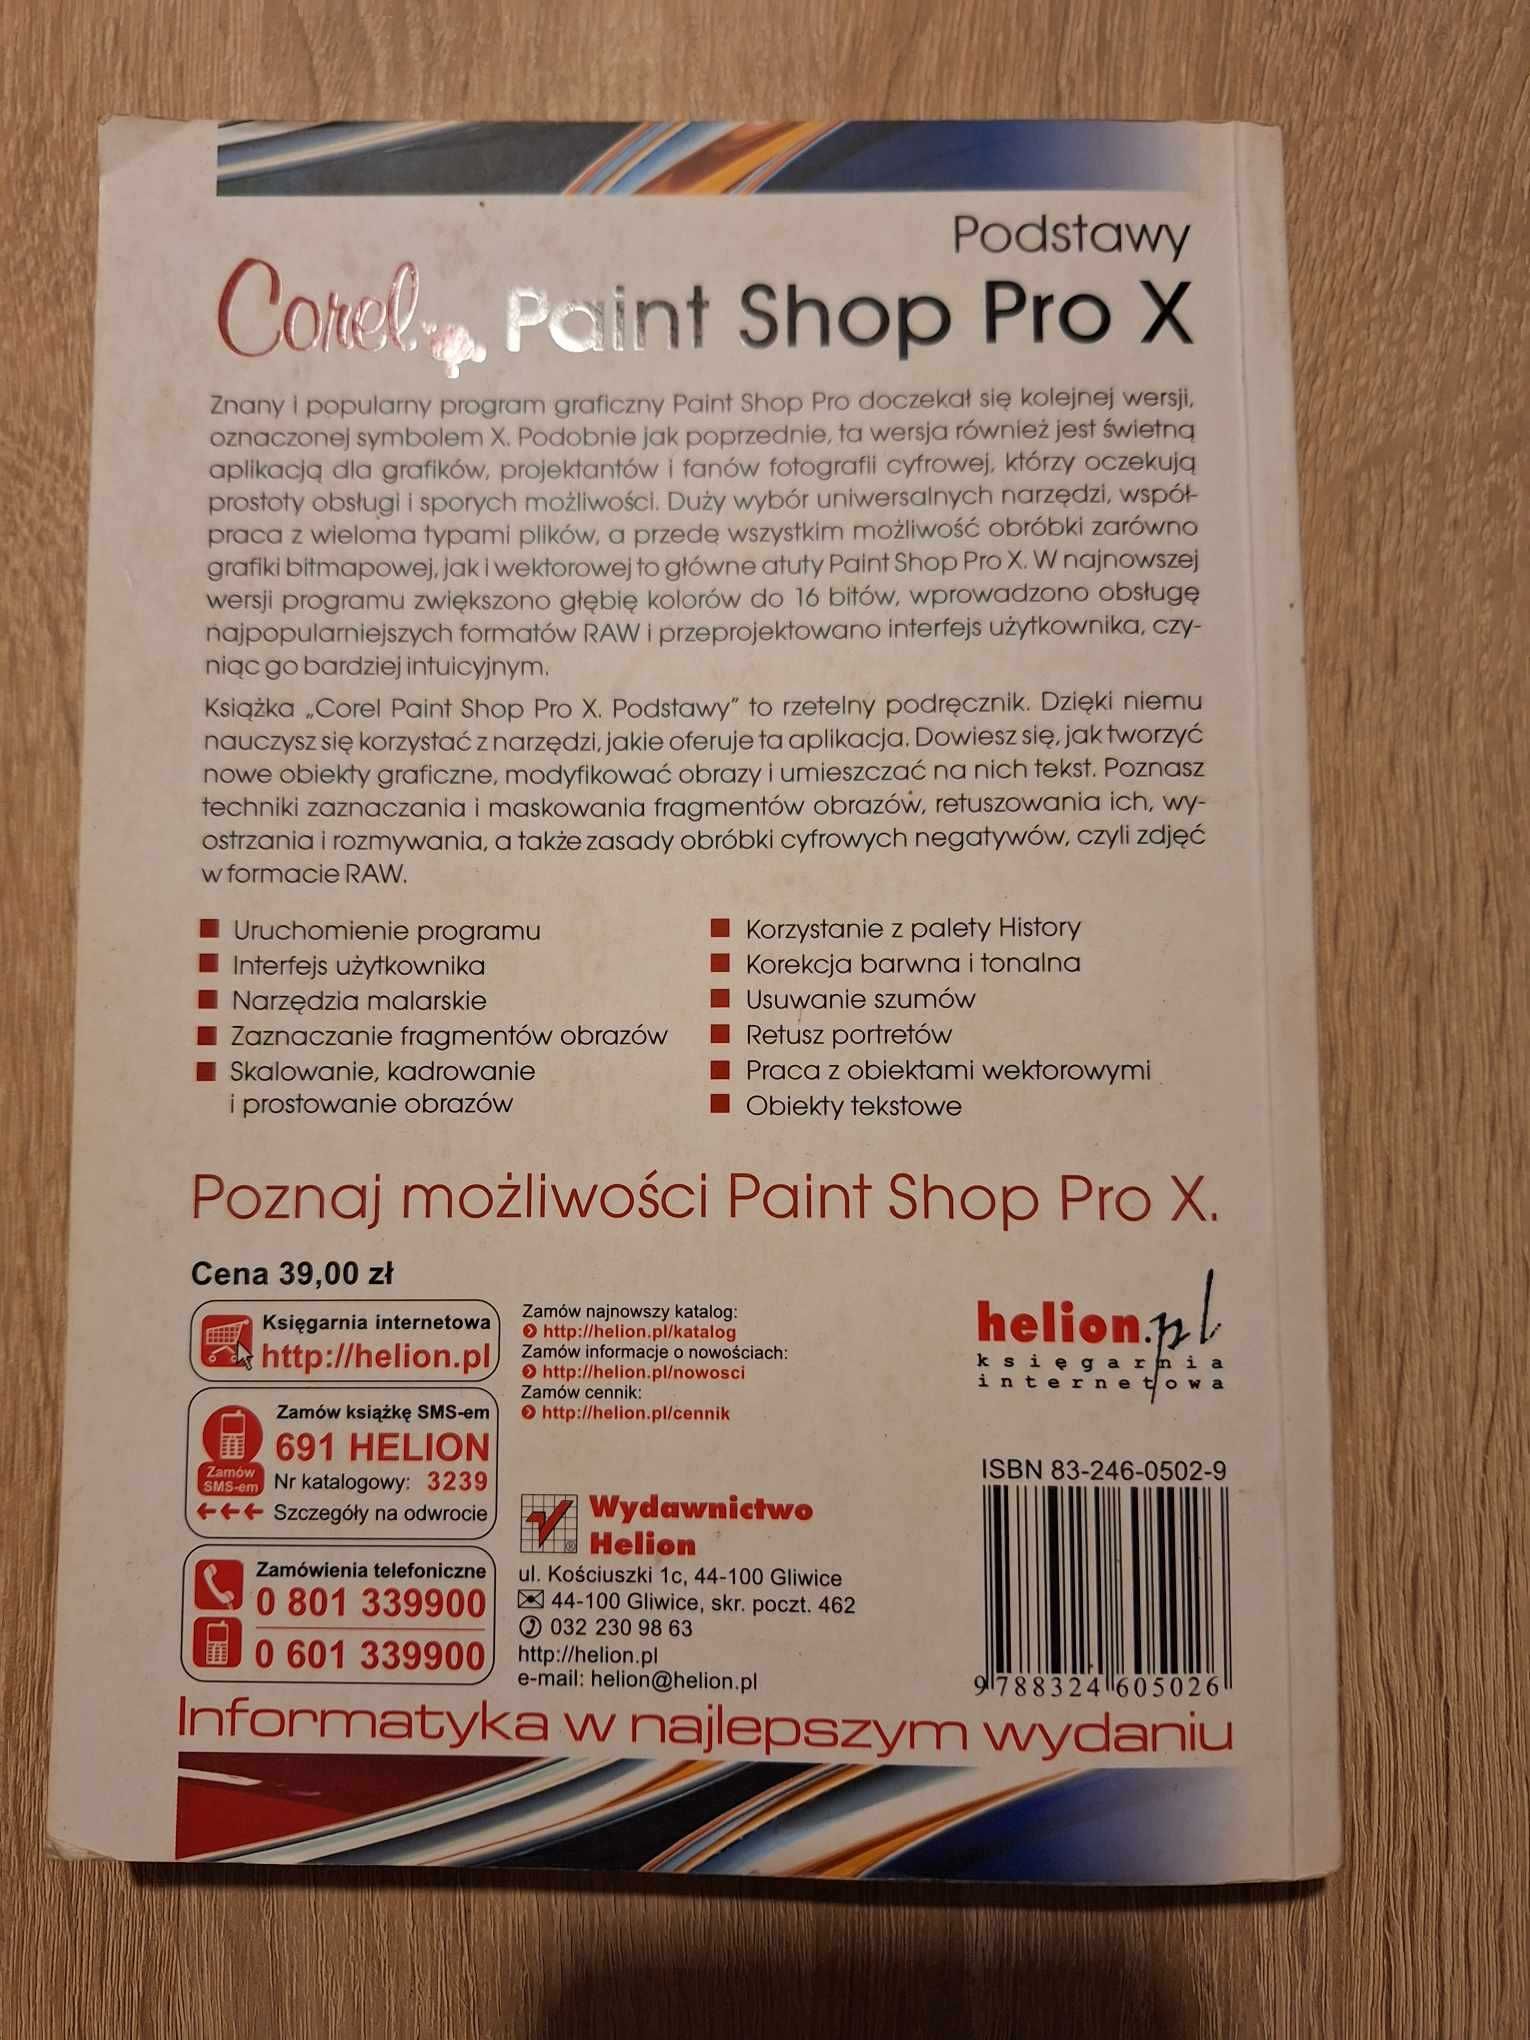 Książka "Corel Paint Shop Pro X"